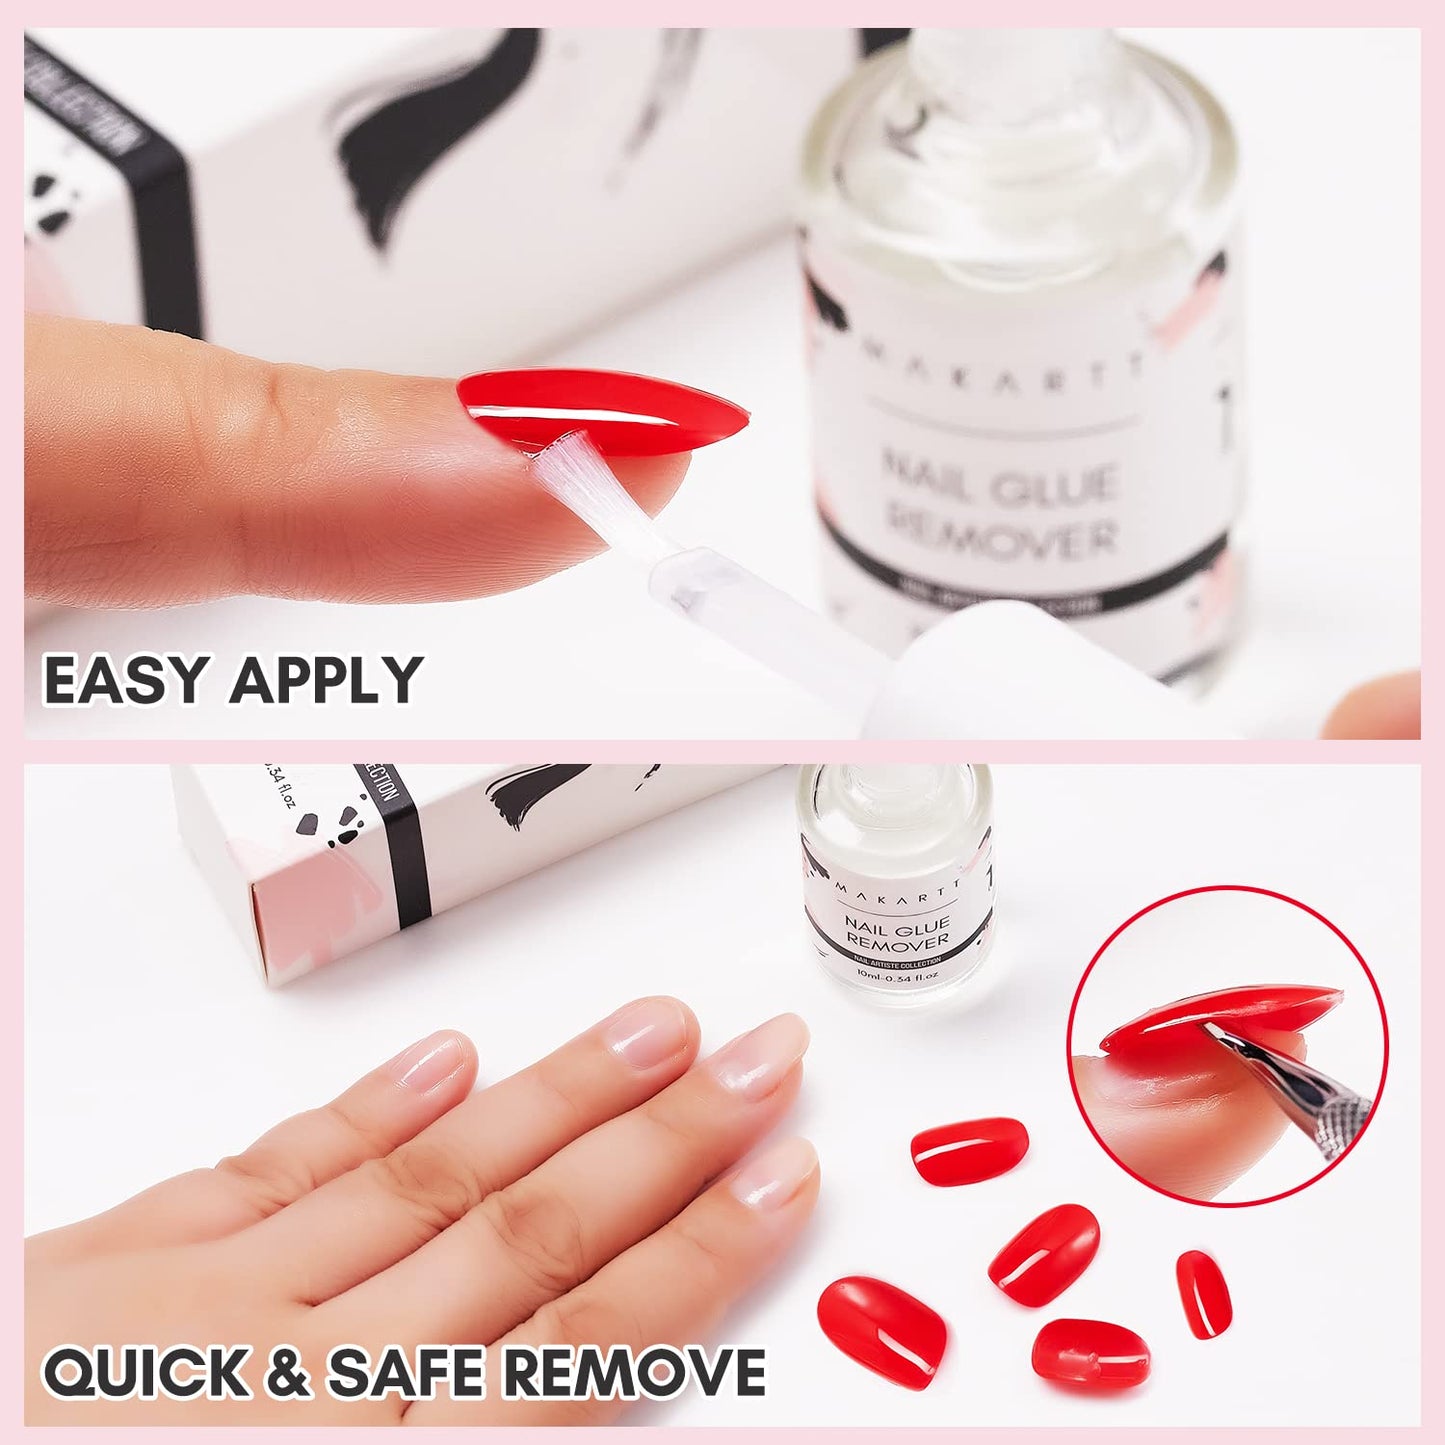 Makartt Instant Nail Glue Remover for Press on Nails,0.34 fl oz / 10ml Debonder,Professional Nail Tips Artificial Nail Acrylic